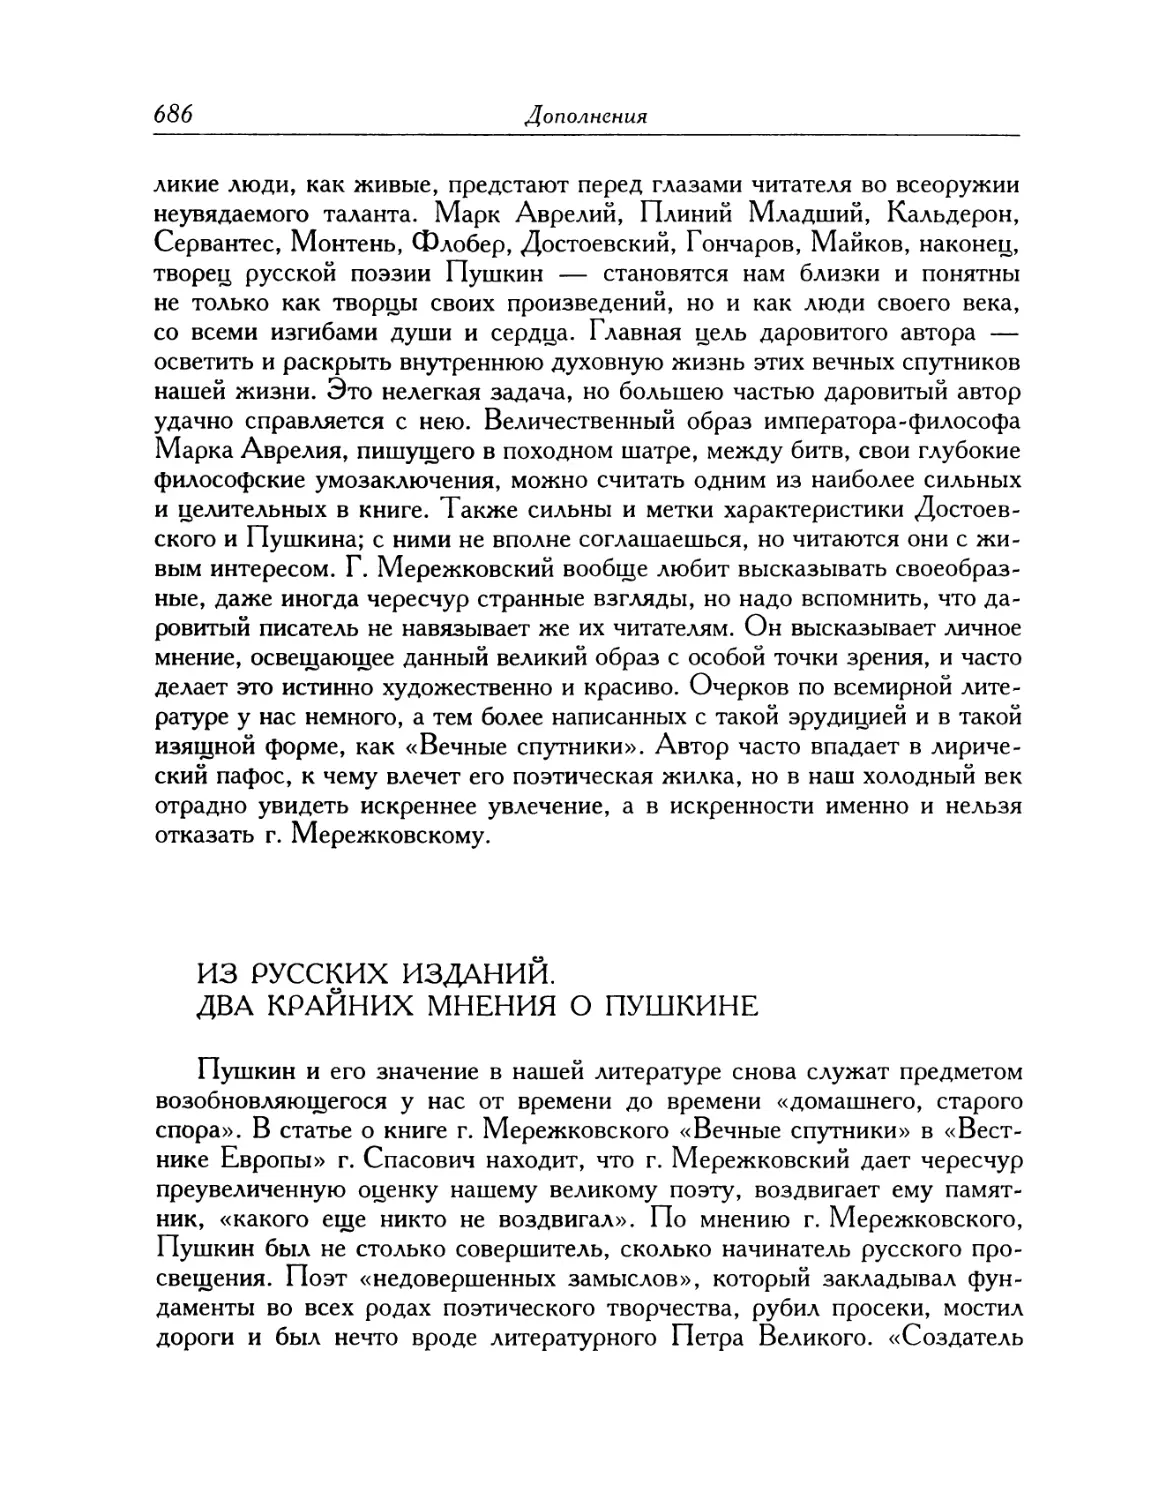 Из русских изданий. Два крайних мнения о Пушкине